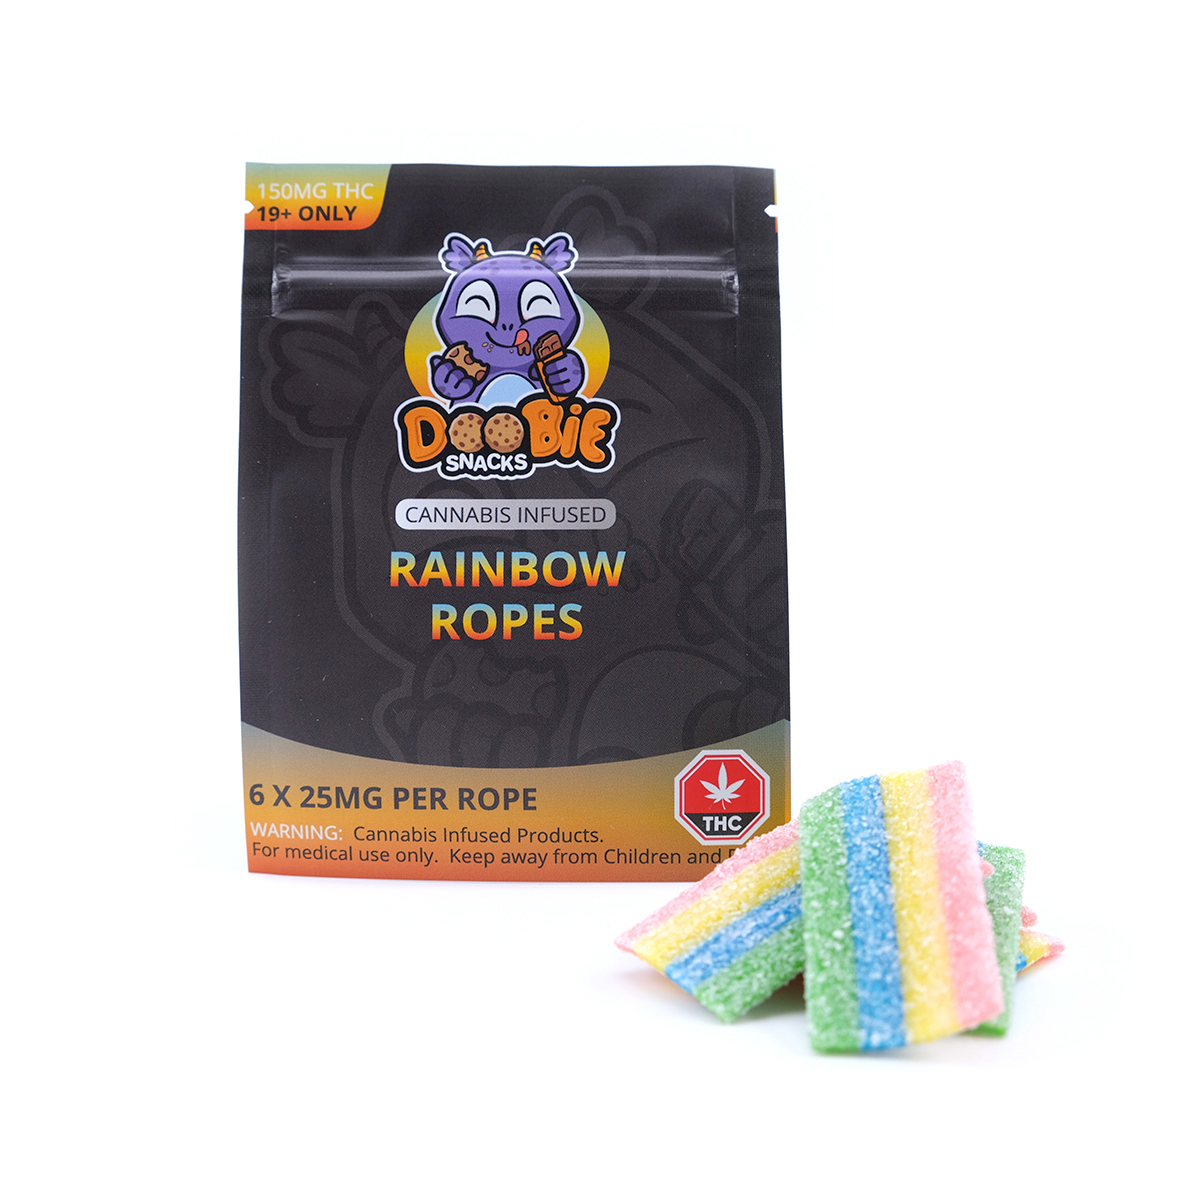 Buy Doobie Snacks Rainbow Ropes 150mg THC